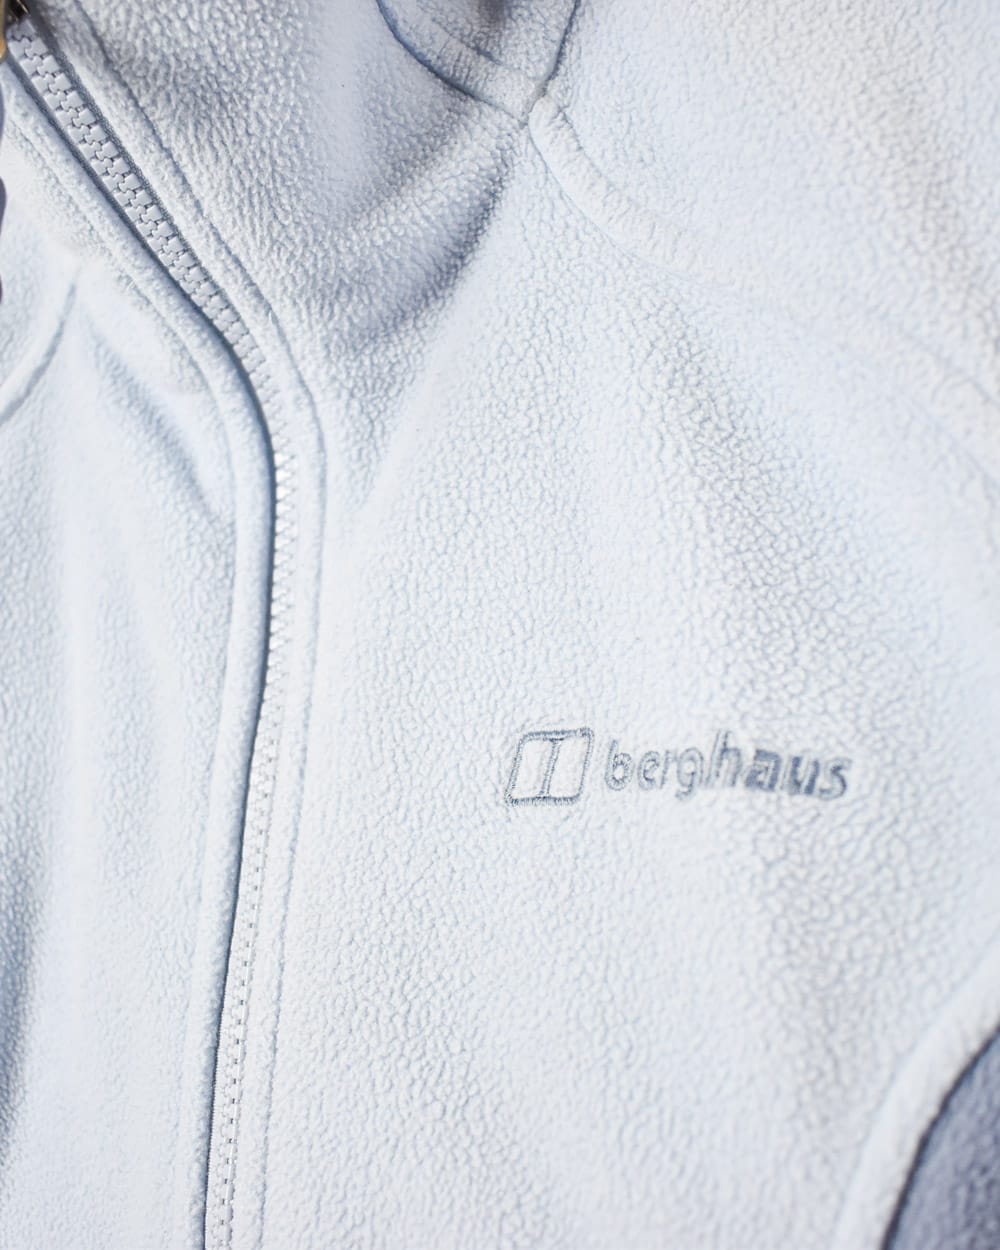 Baby Berghaus Fleece Bodywarmer - Small Woman's